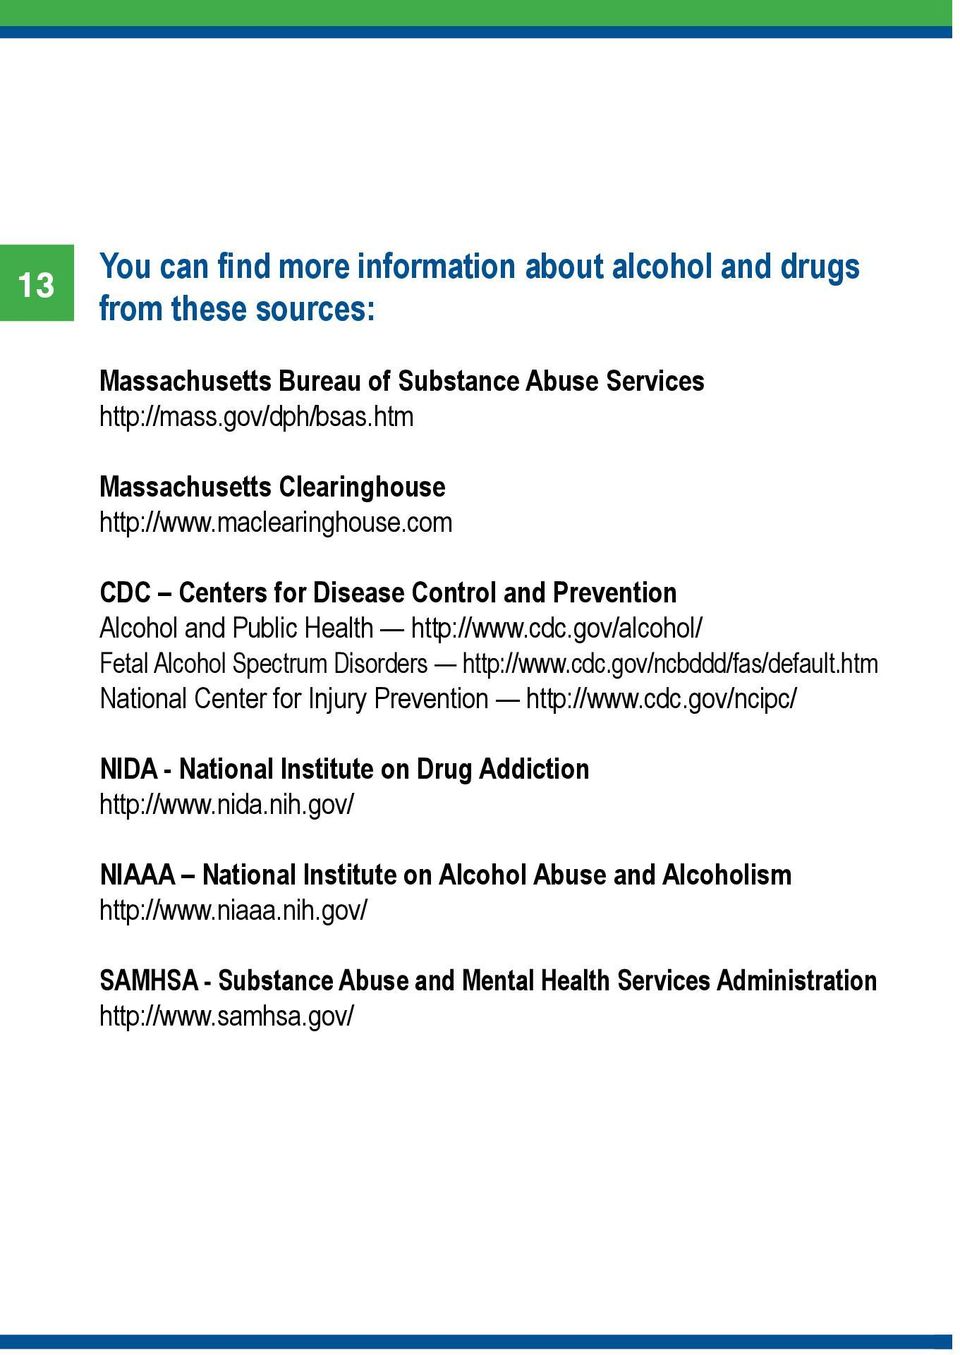 gov/alcohol/ Fetal Alcohol Spectrum Disorders http://www.cdc.gov/ncbddd/fas/default.htm National Center for Injury Prevention http://www.cdc.gov/ncipc/ NIDA - National Institute on Drug Addiction http://www.